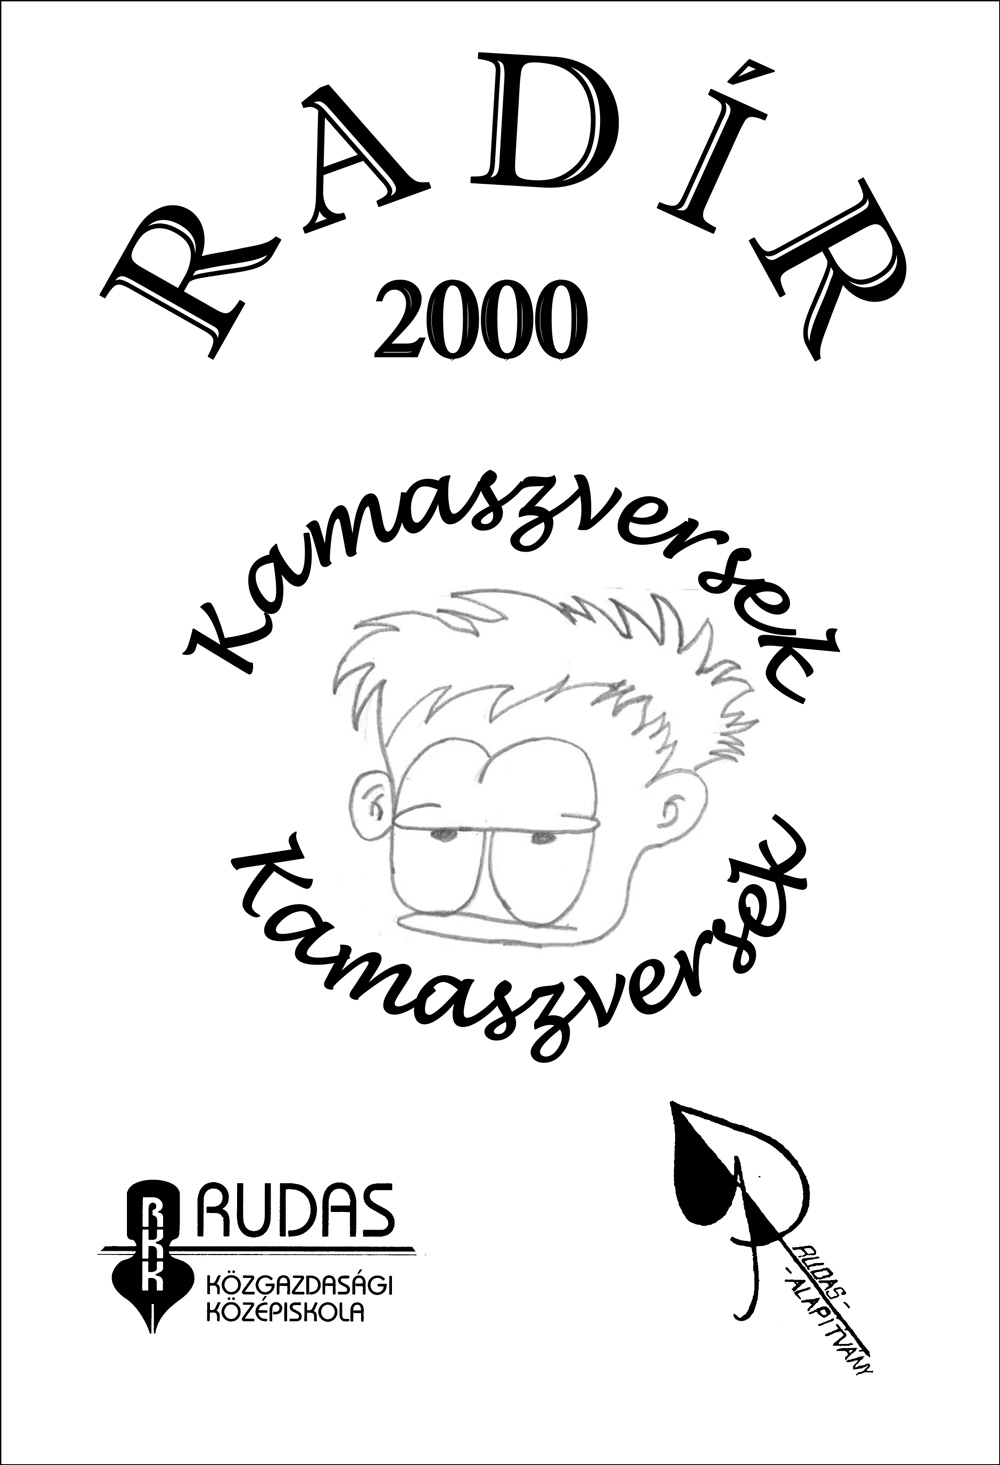 RADÍR 2000 - KAMASZVERSEK